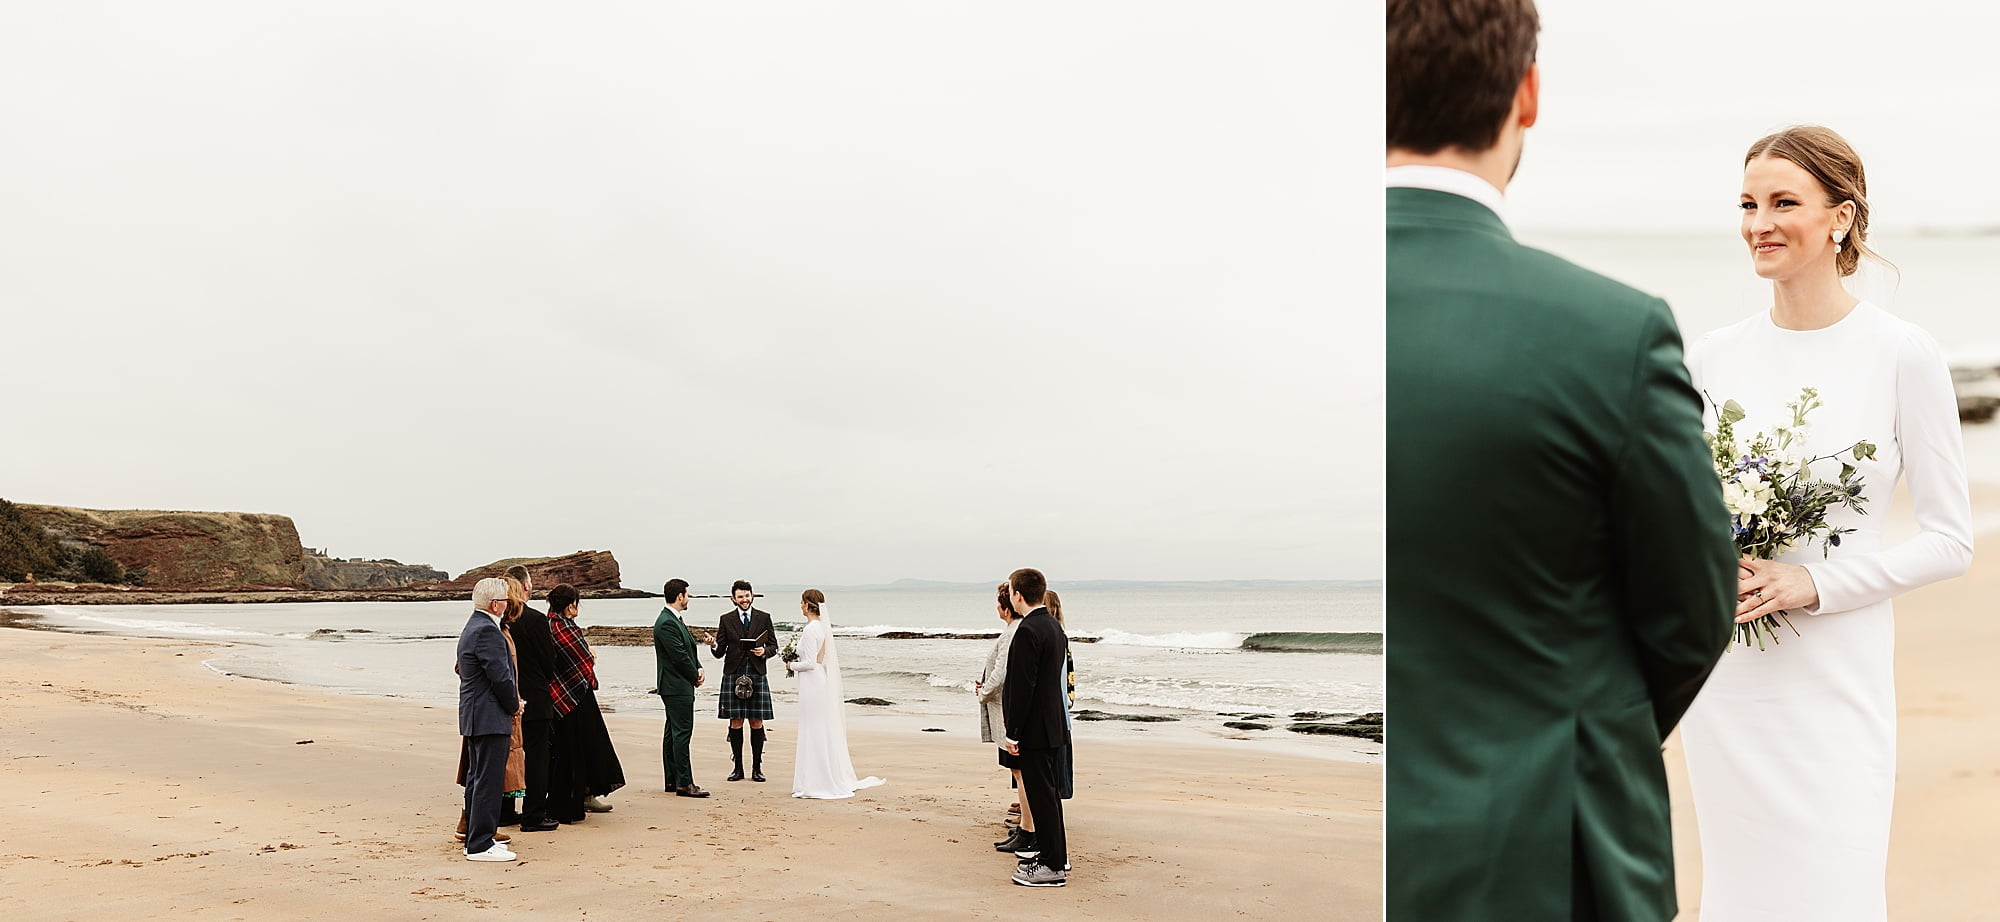 seacliff beach micro wedding ceremony spot scenery view bride and groom